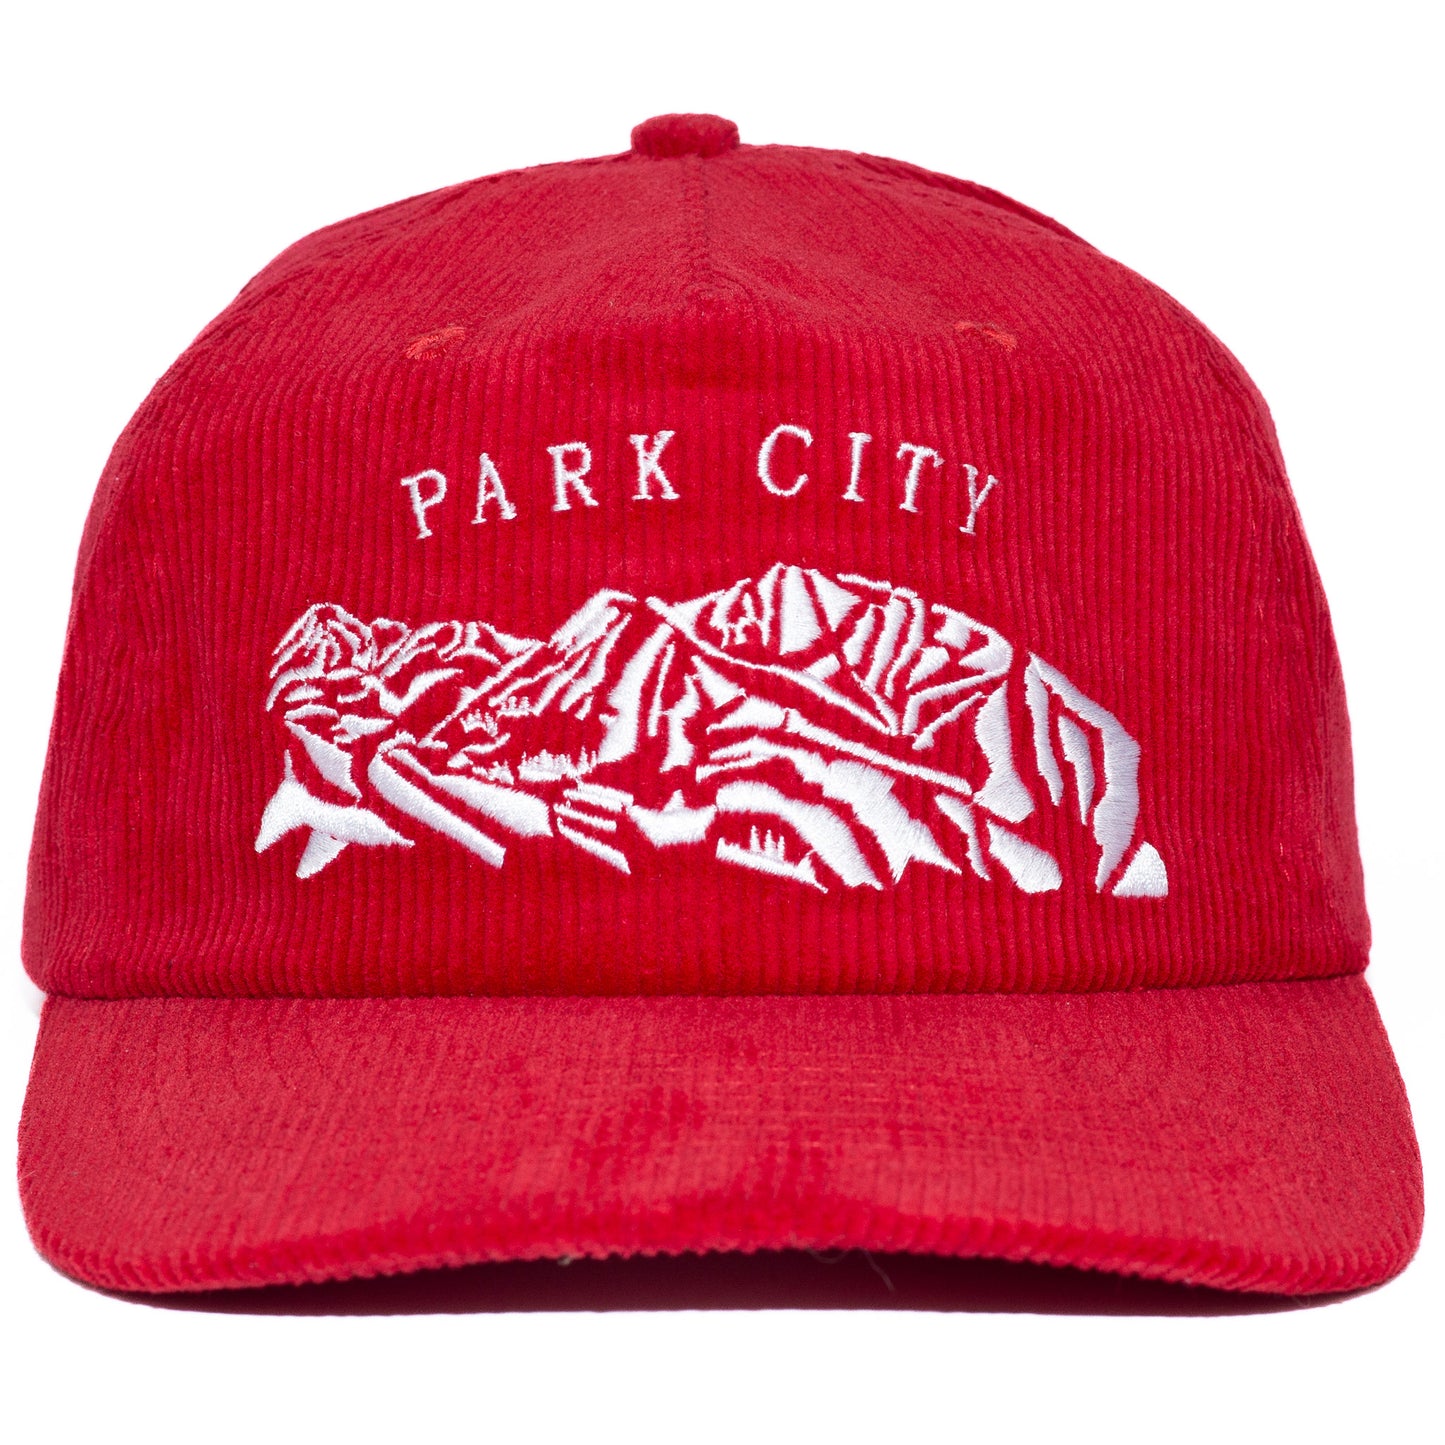 Park City Cap - Red